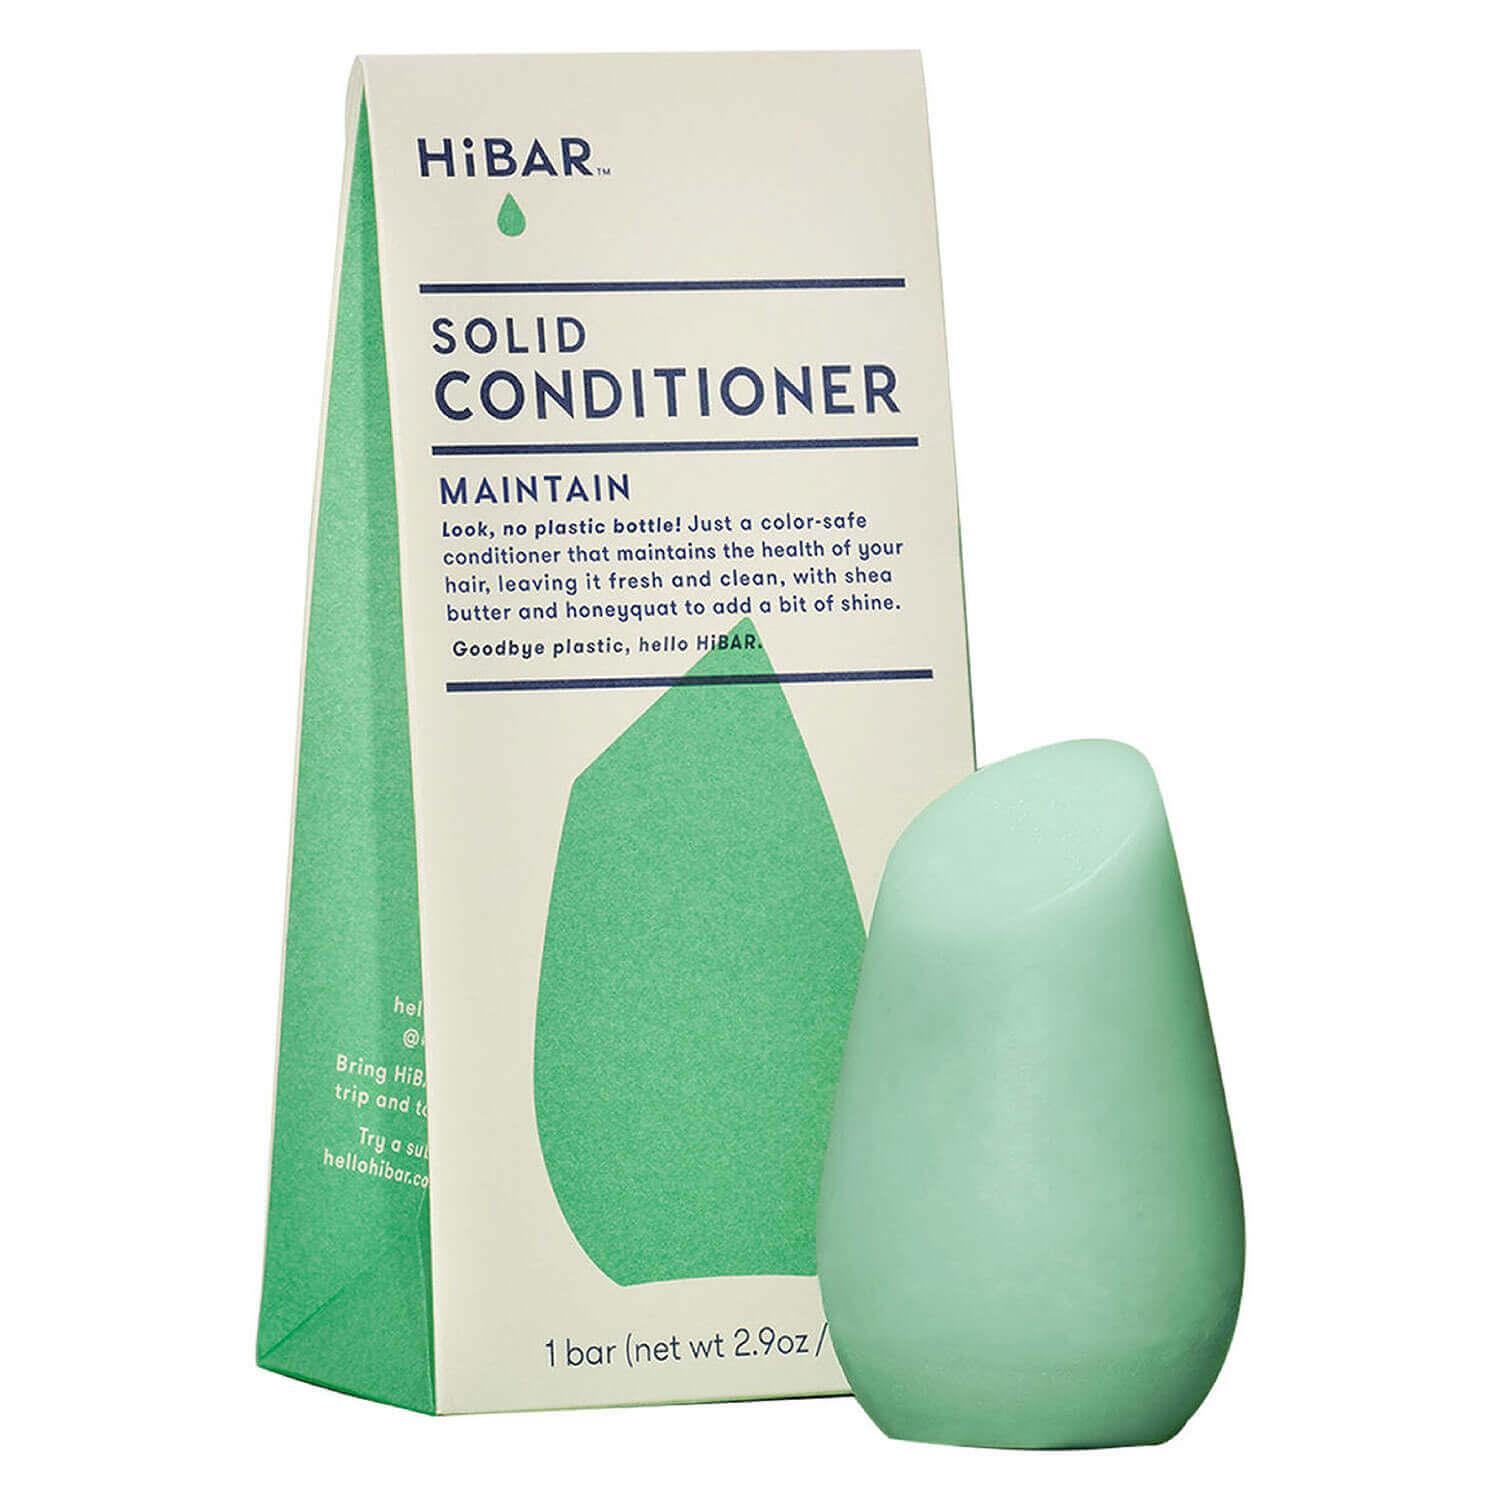 HiBAR - MAINTAIN Solid Conditioner